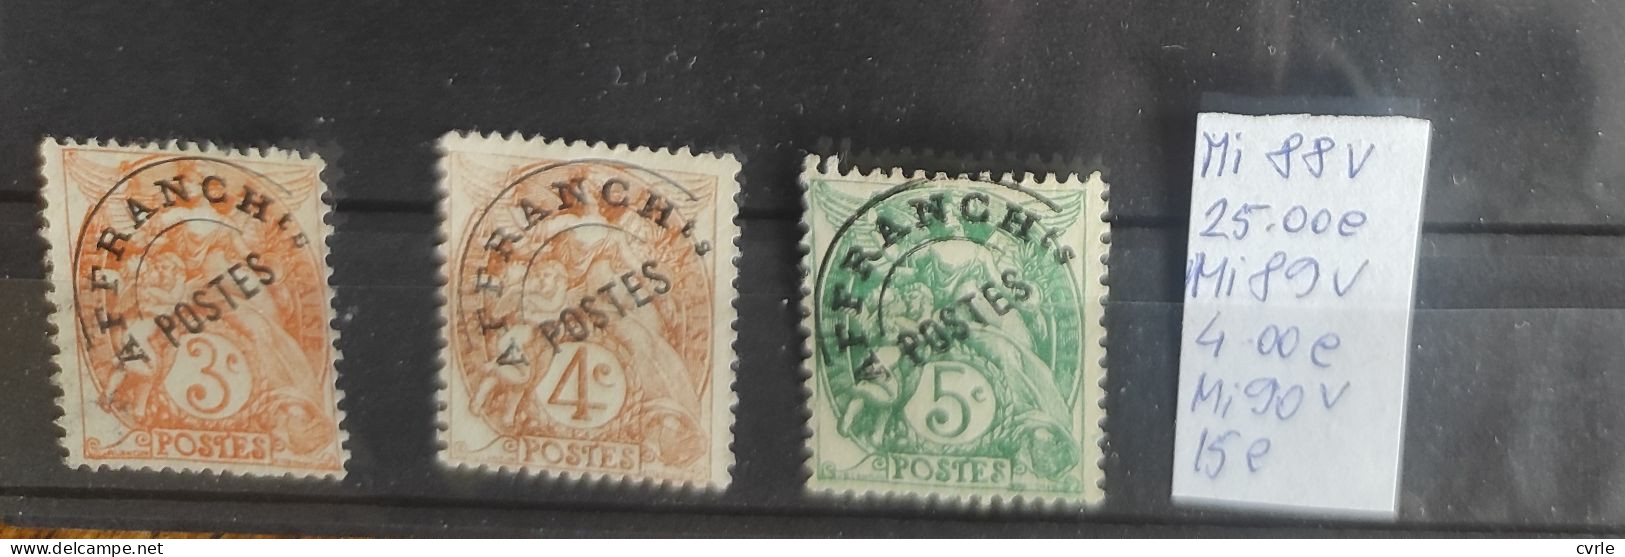 Allegory (Type Blanc) Precancellation Stamps - 1893-1947